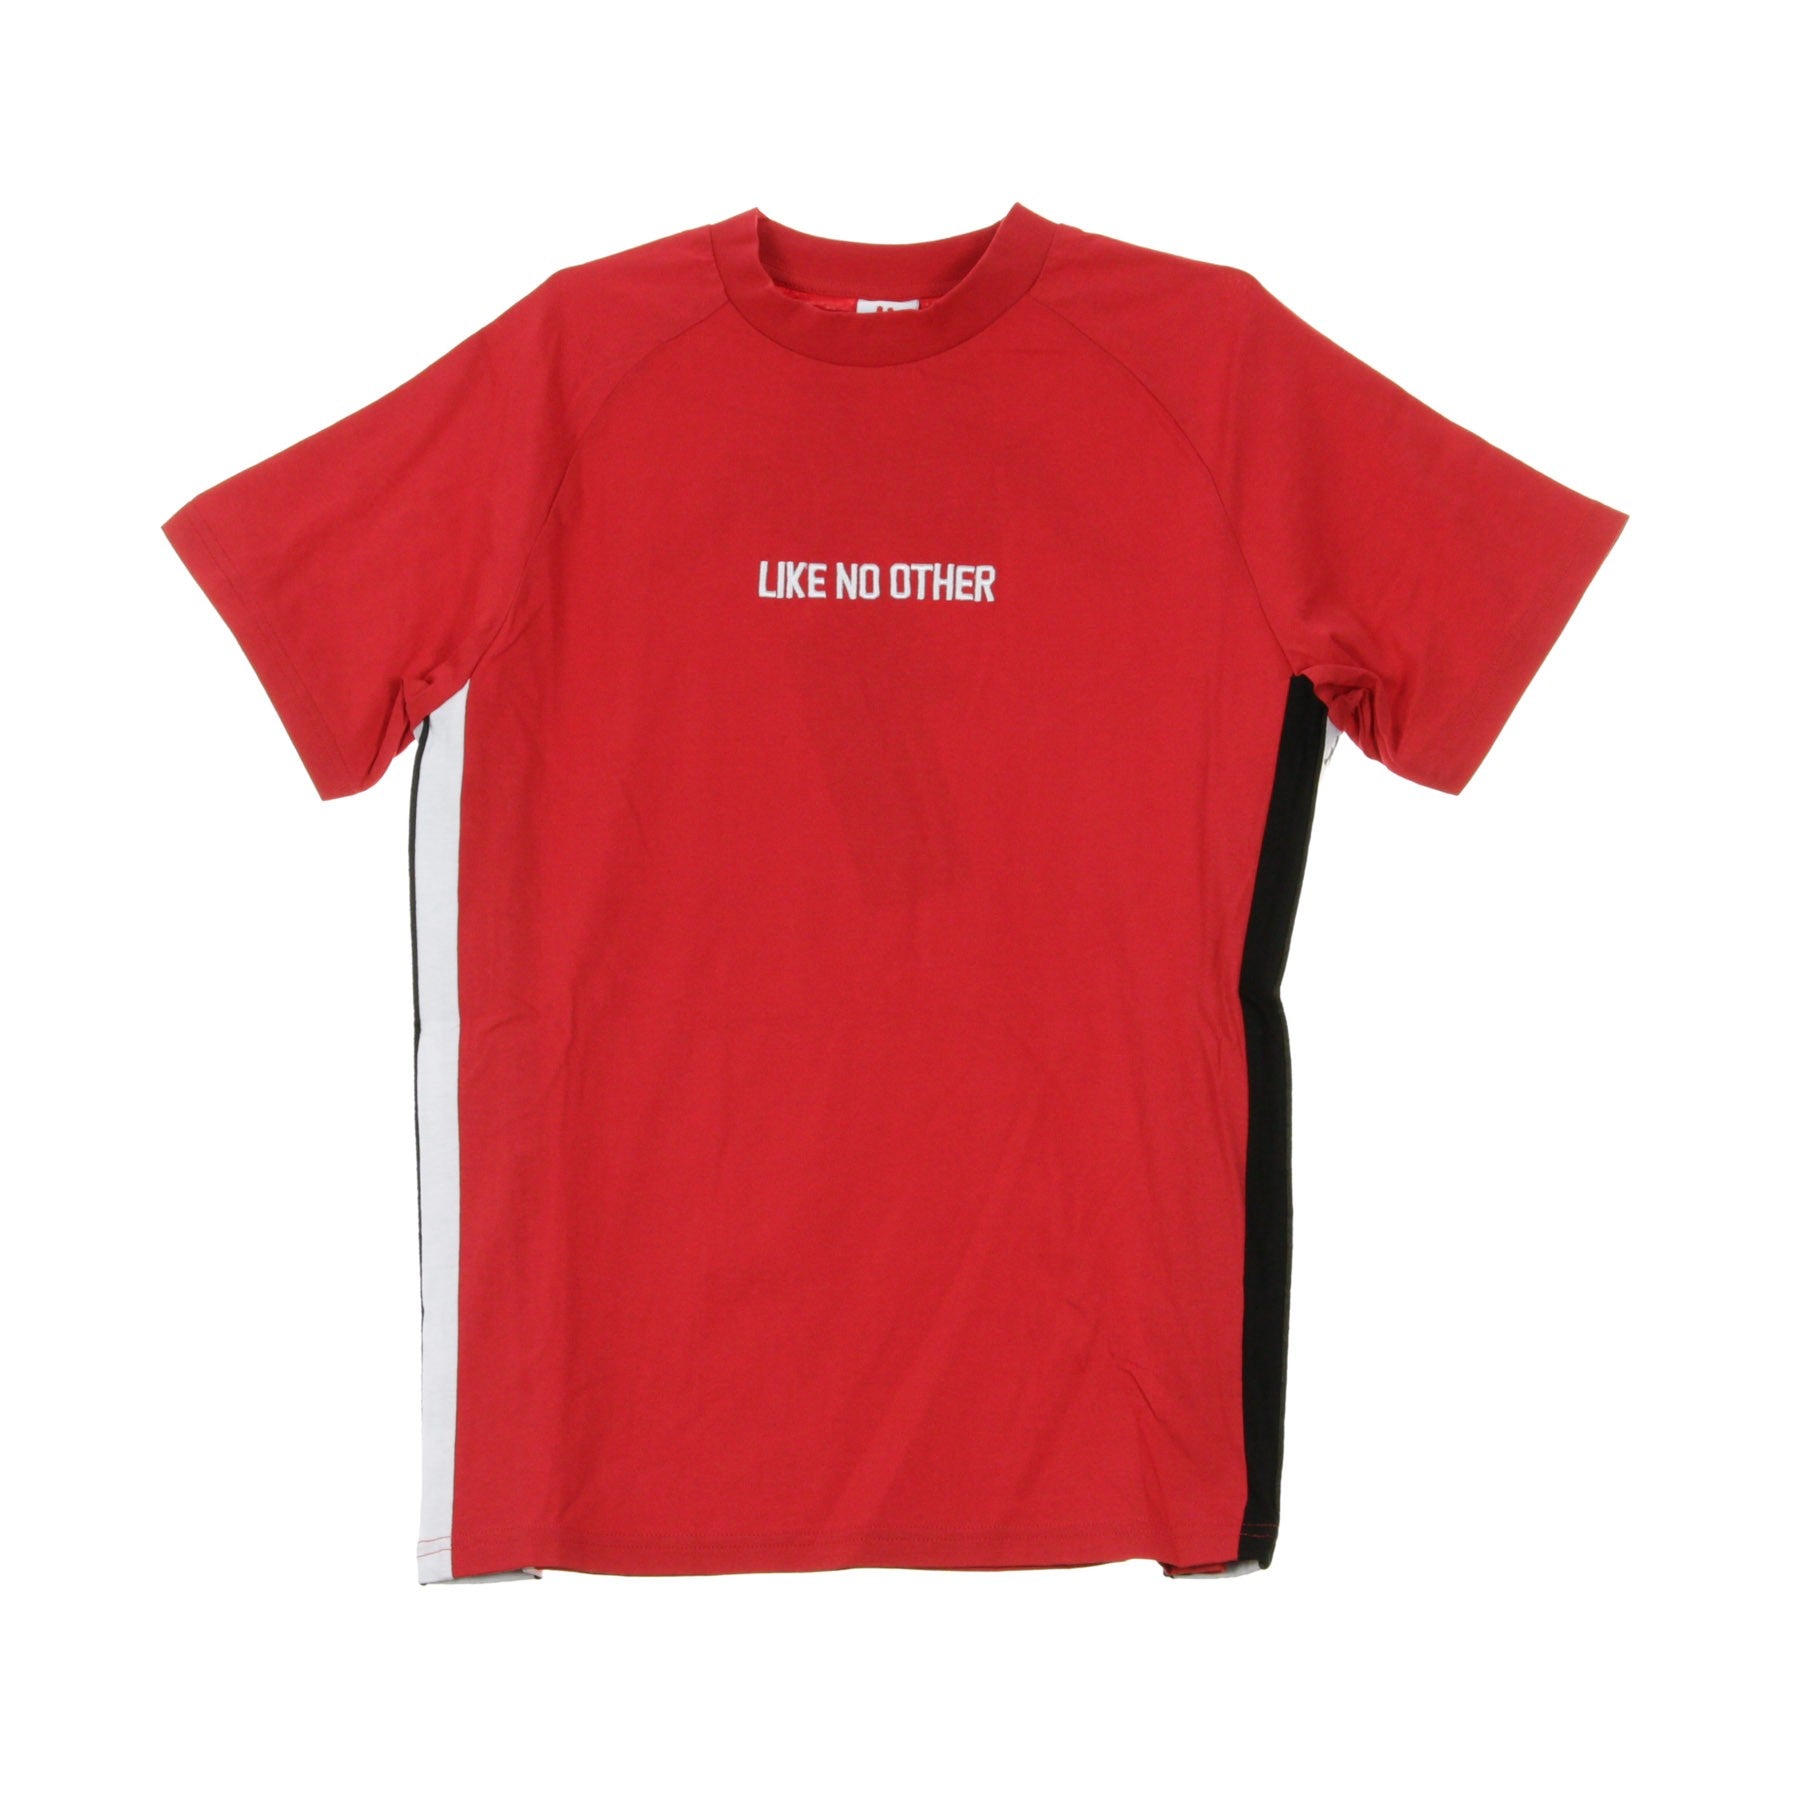 Authentic Balmin Red/black/white men's t-shirt